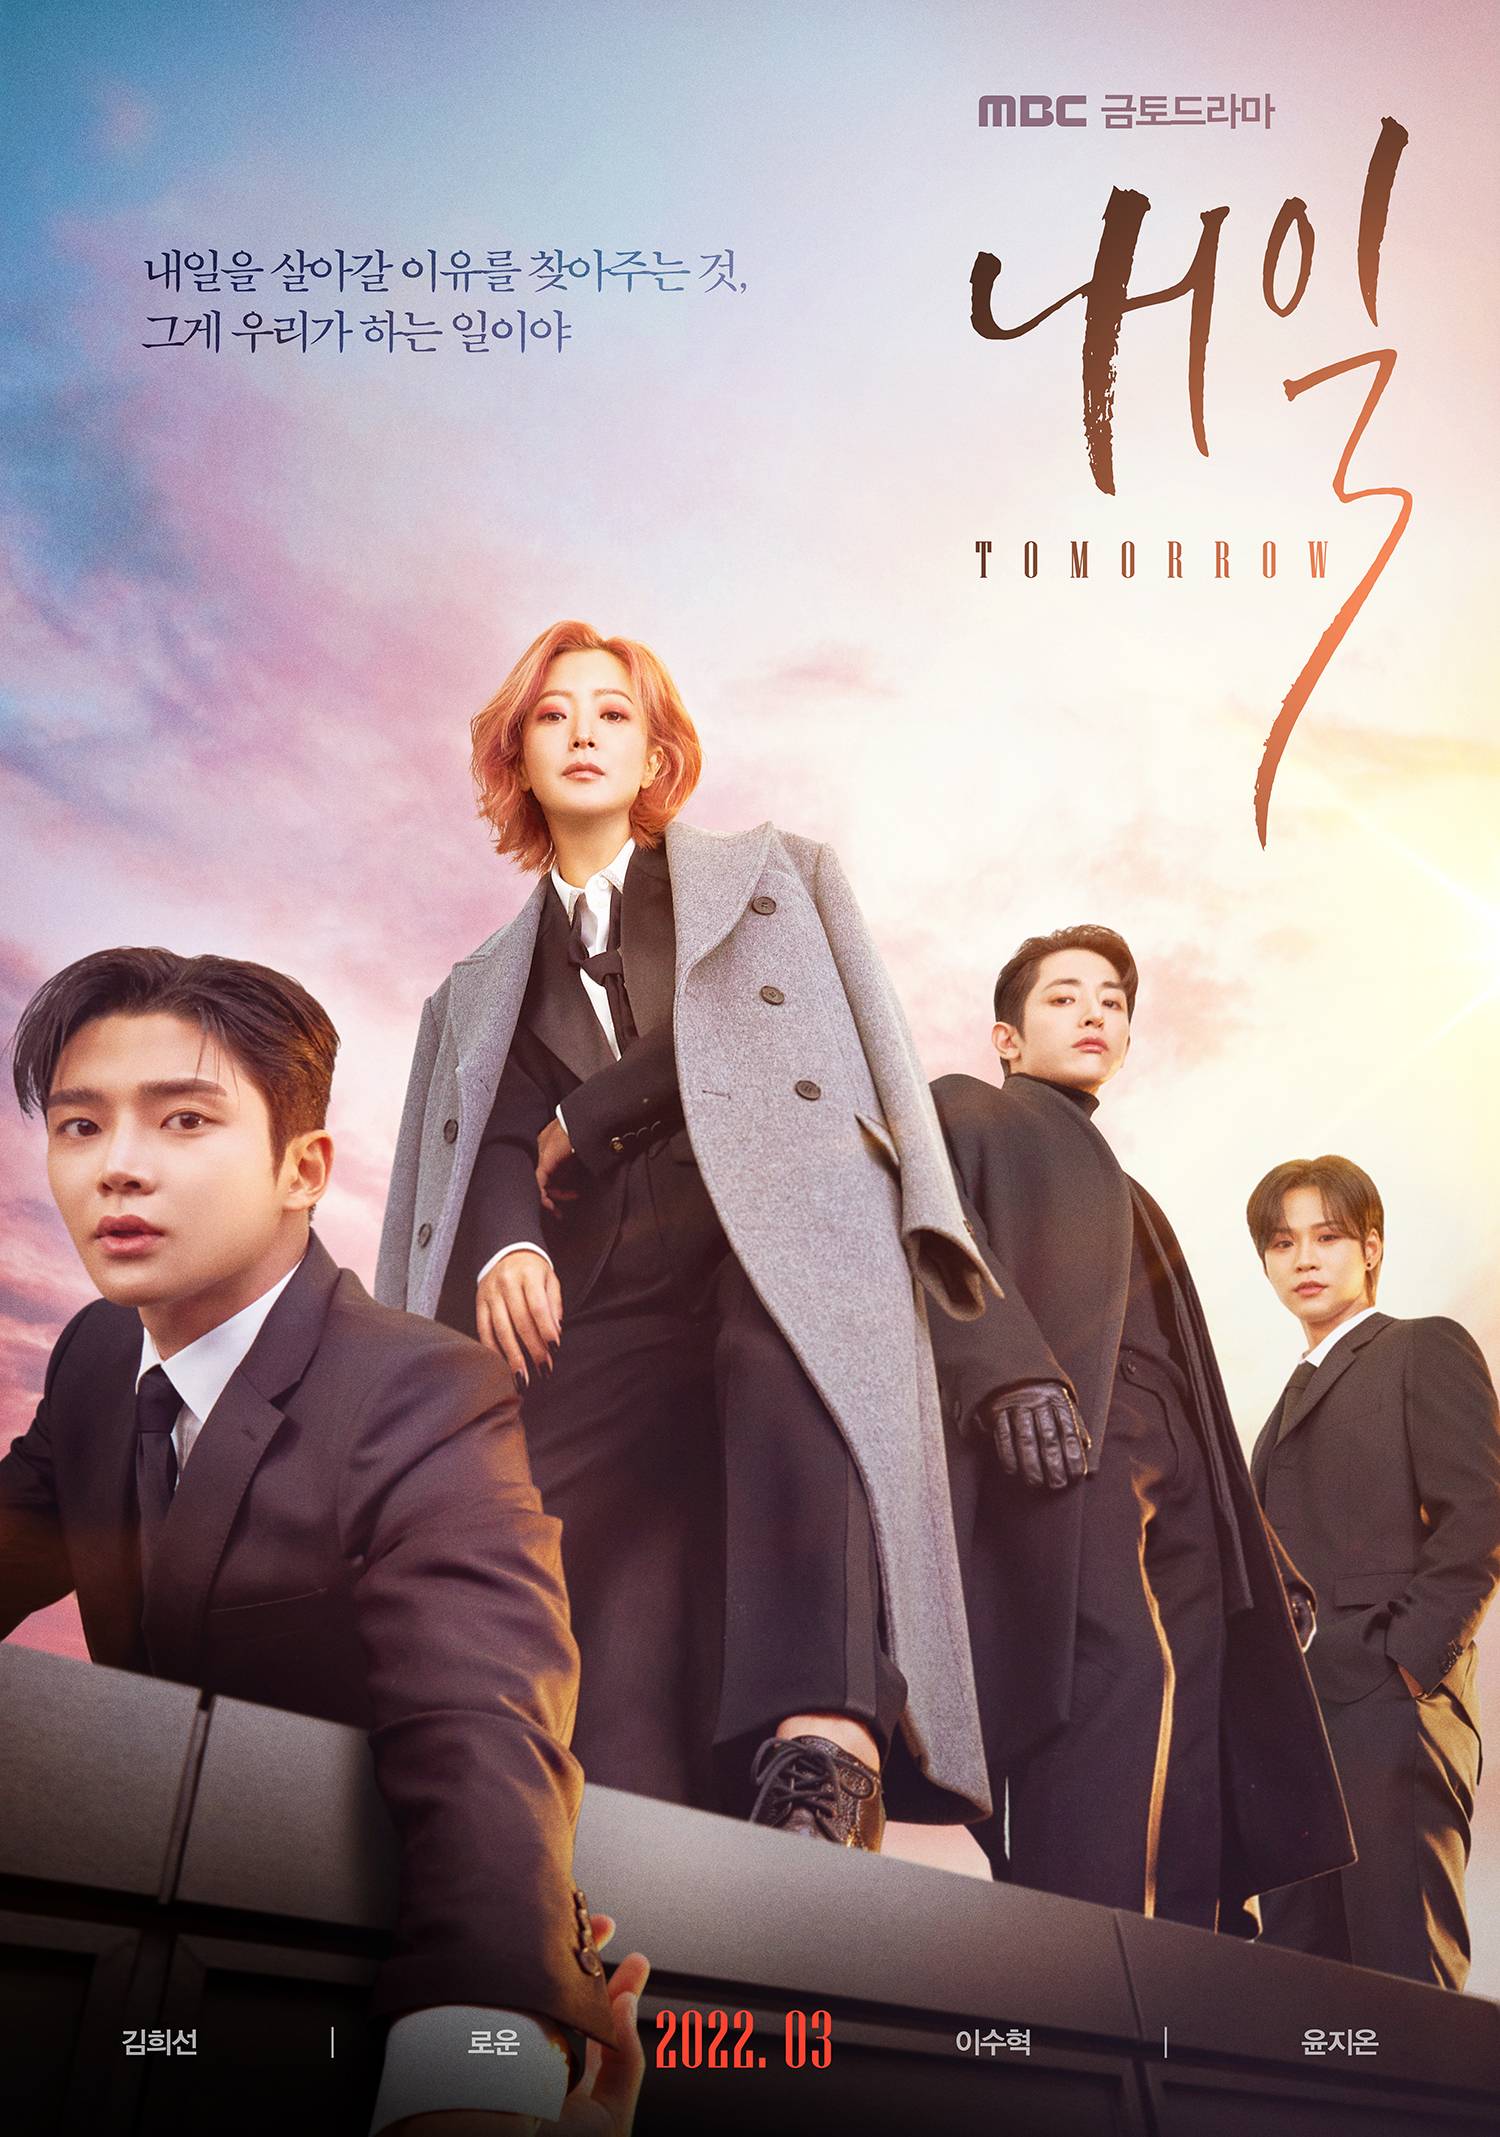 Photo Poster Added for the Upcoming Korean Drama 'Tomorrow' HanCinema